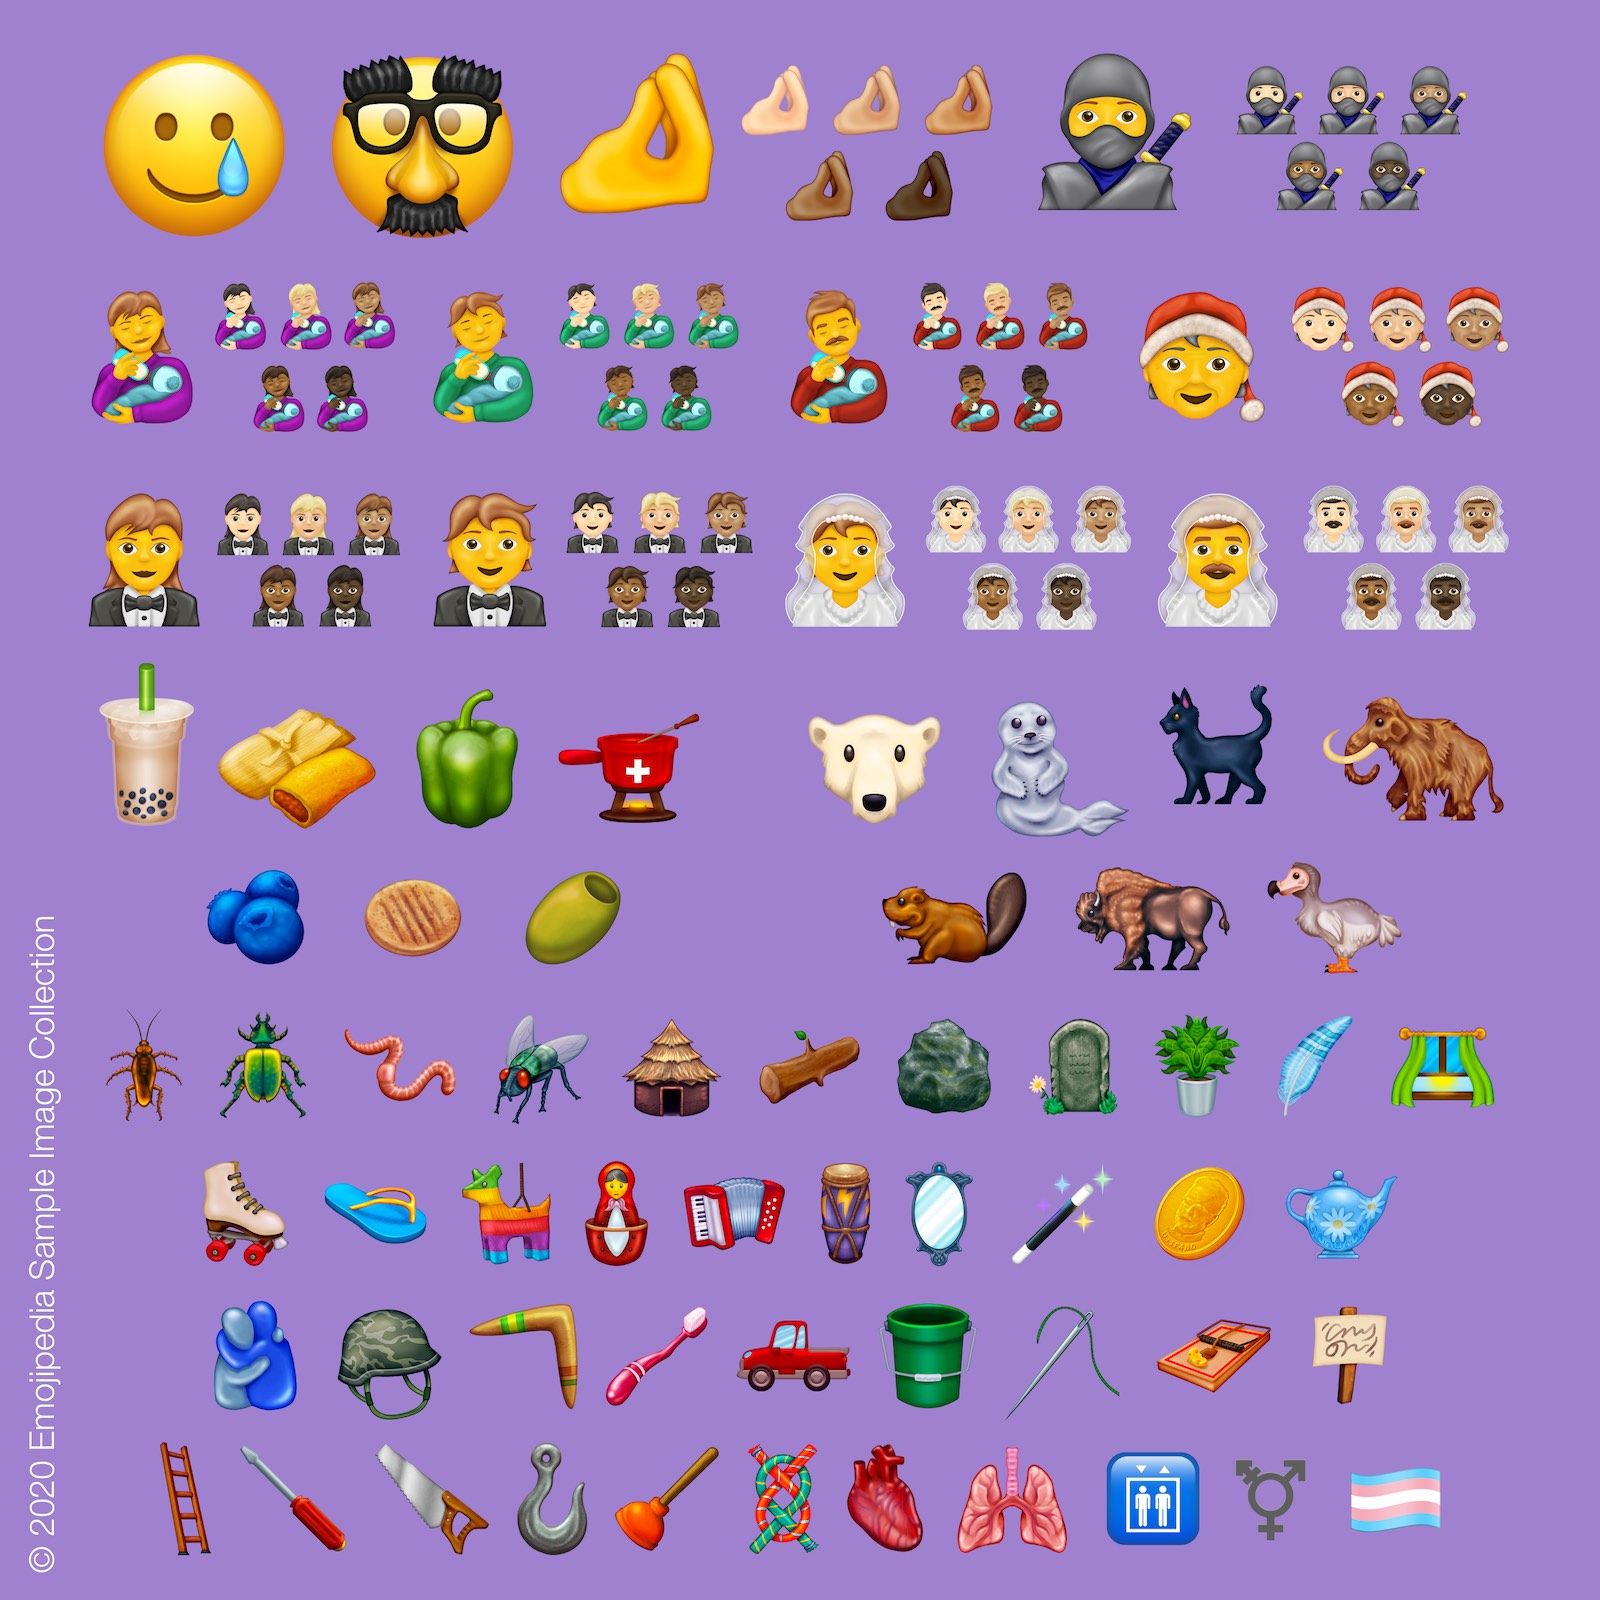 2020 emojipedia sample image collection